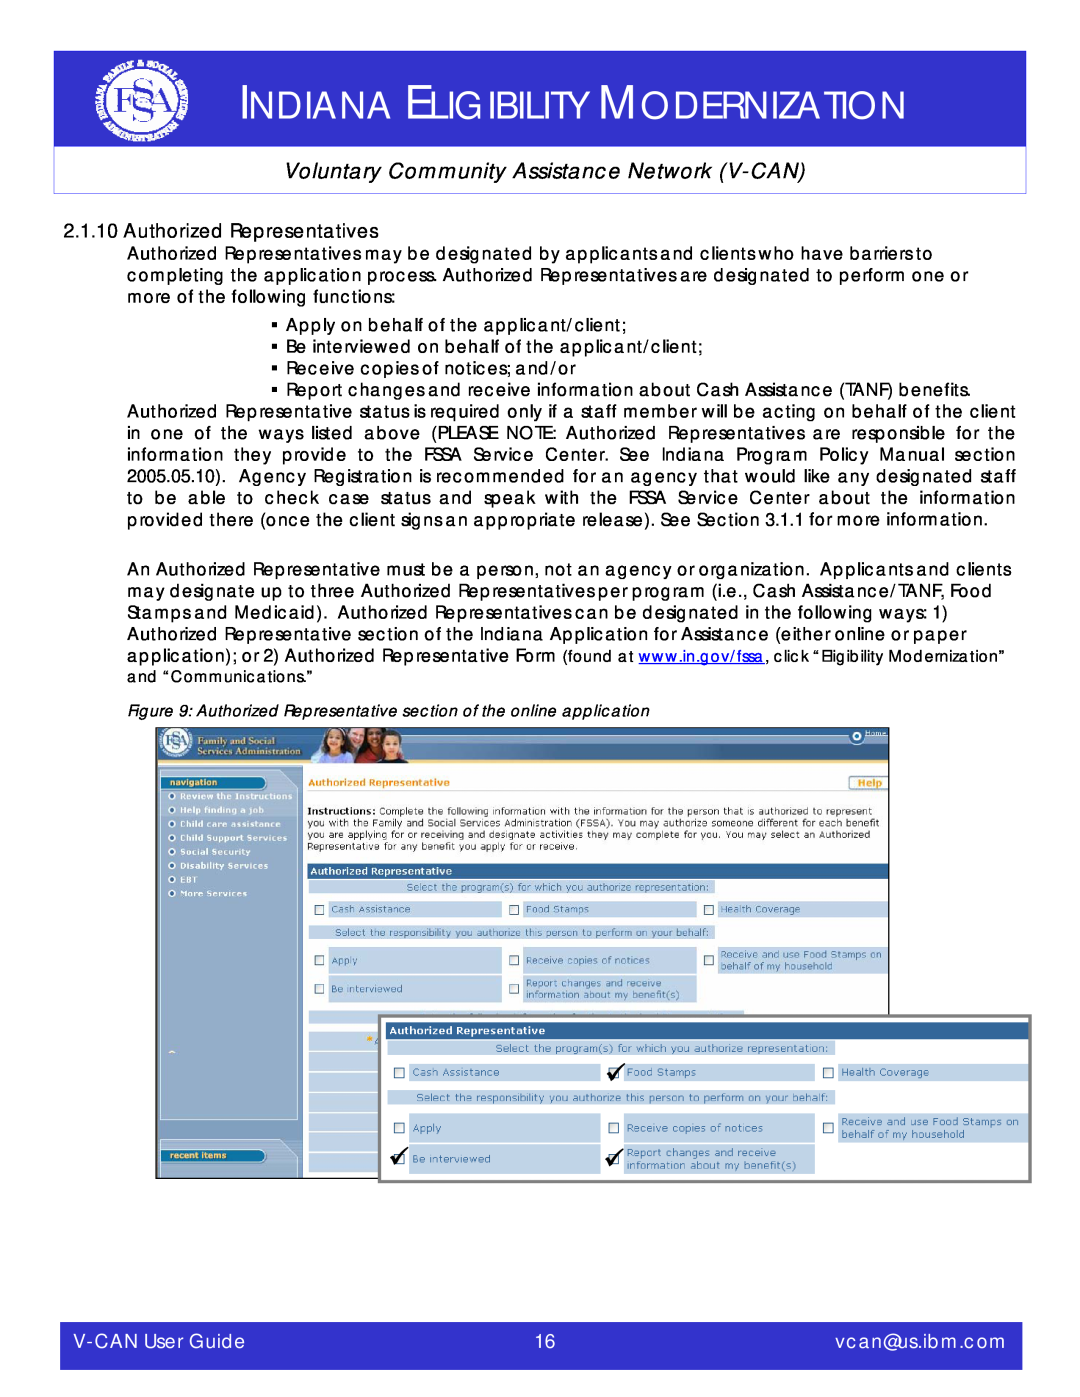 IBM manual Authorized Representatives, Indiana Eligibility Modernization, Voluntary Community Assistance Network V-CAN 